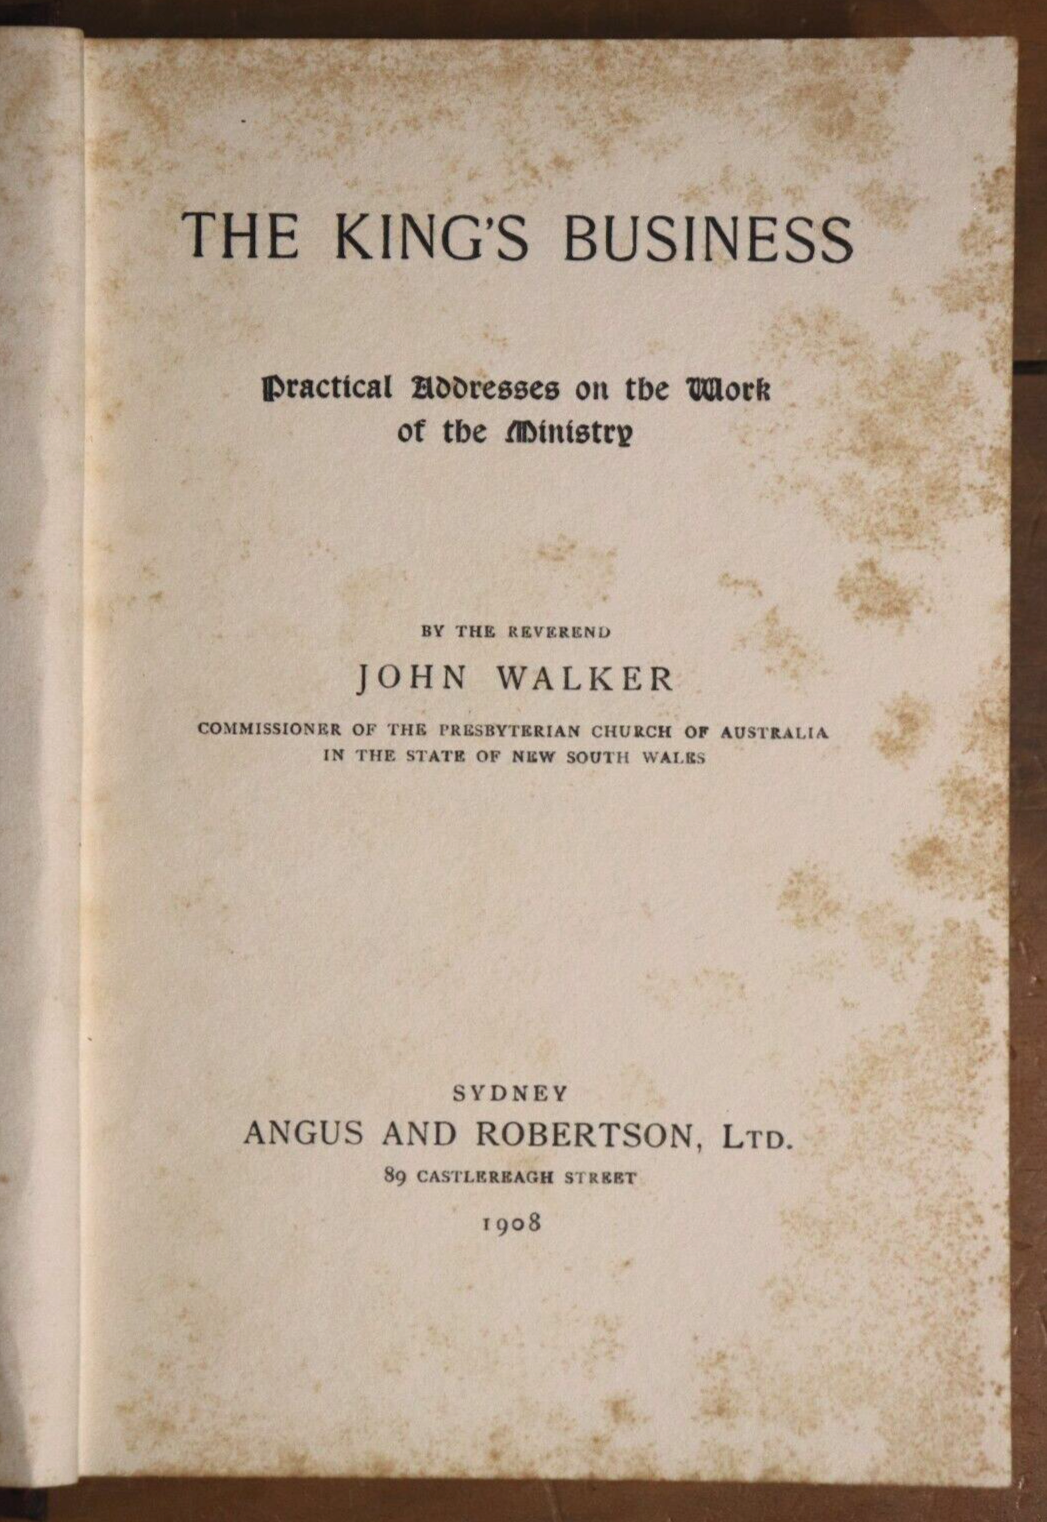 1908 The King's Business by John Walker Antique Australian Theology Book - 0